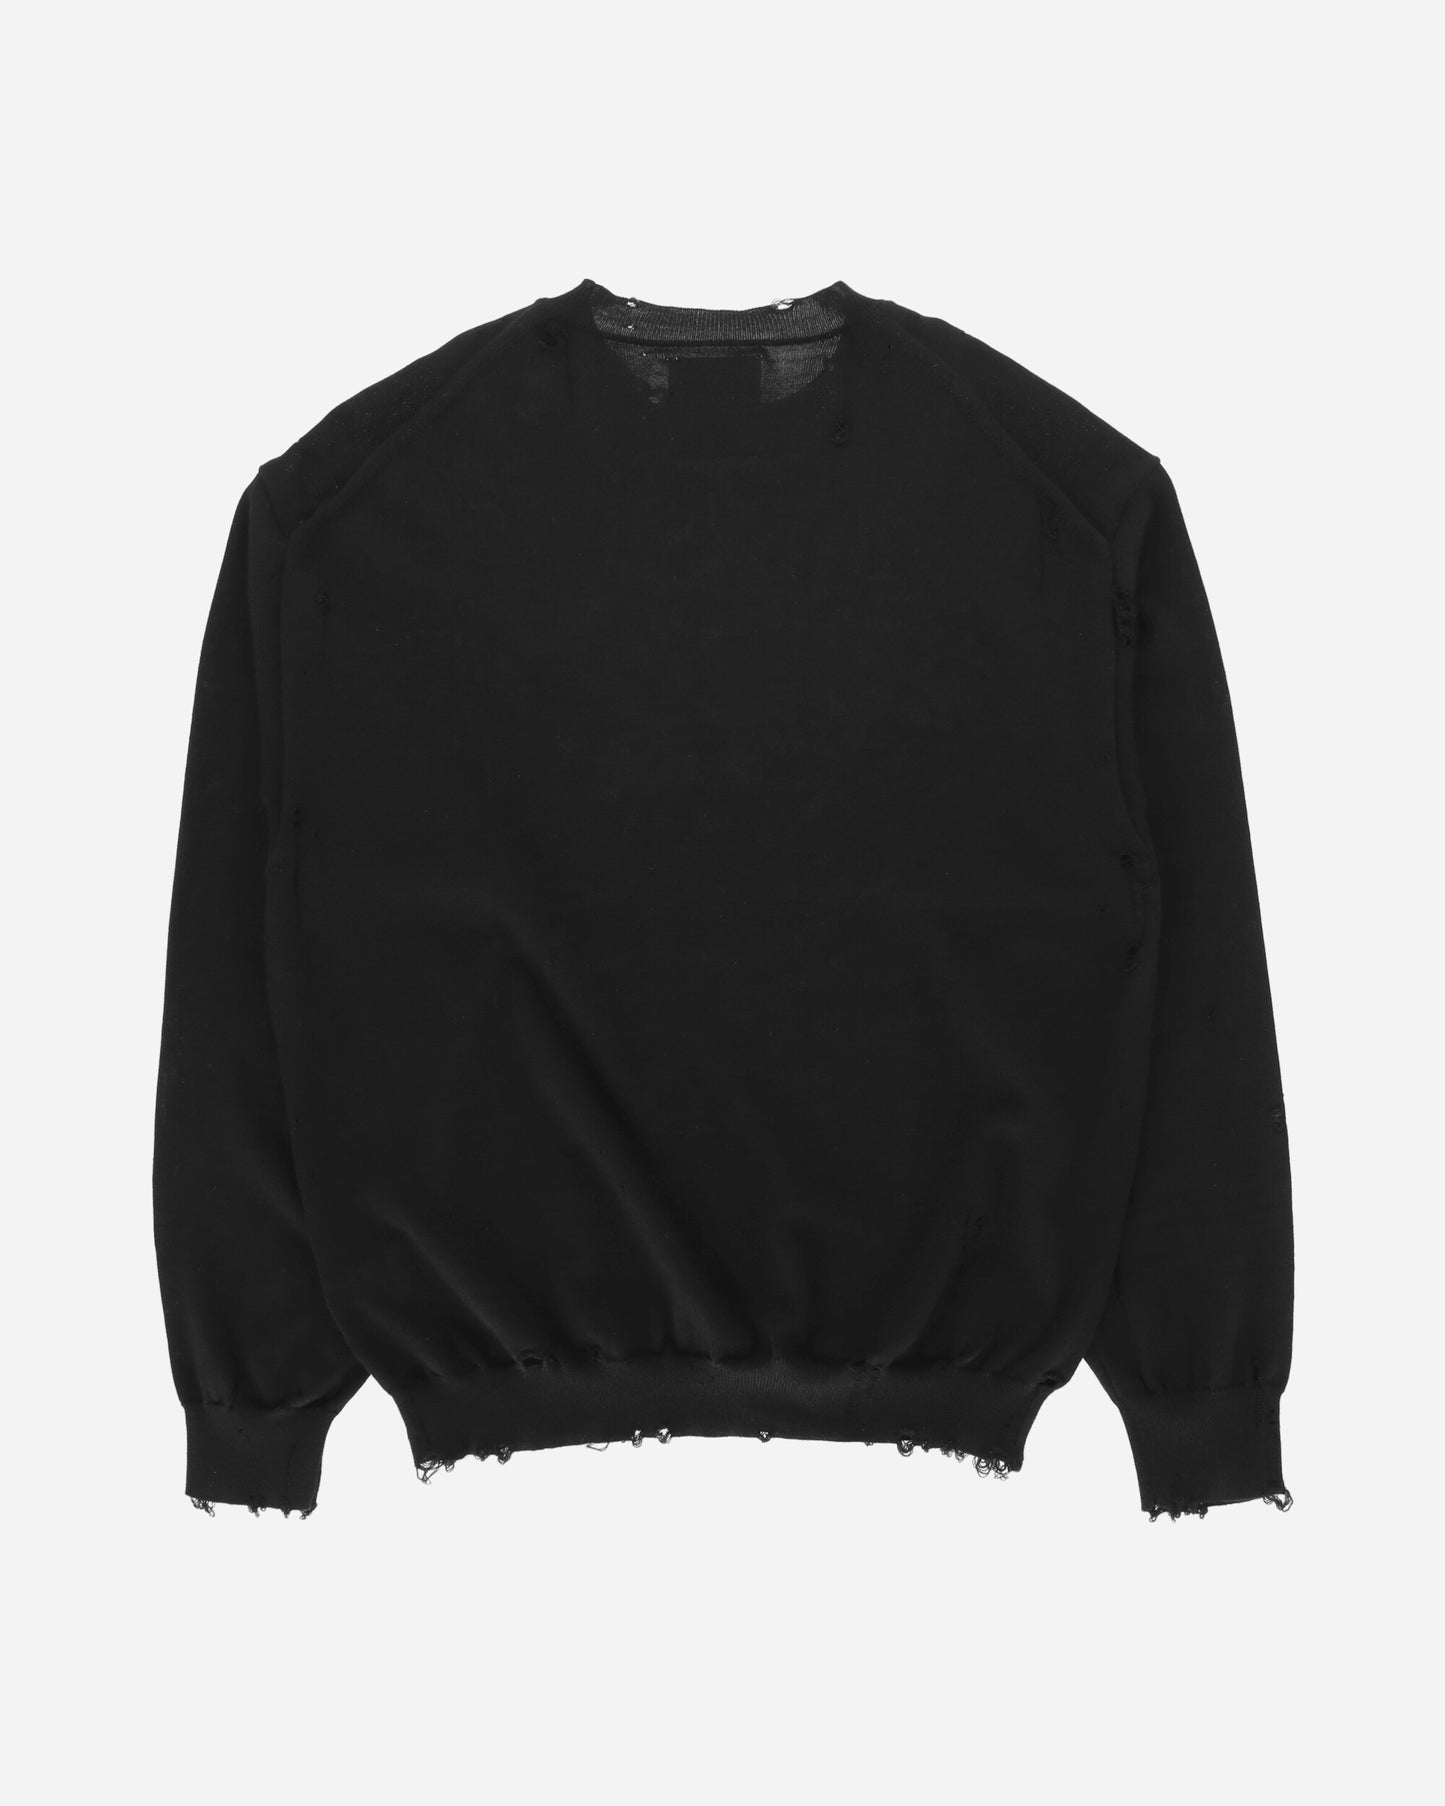 Maison MIHARA YASUHIRO Distressed Knit Pullover Black Knitwears Sweaters J11SW503 BLACK